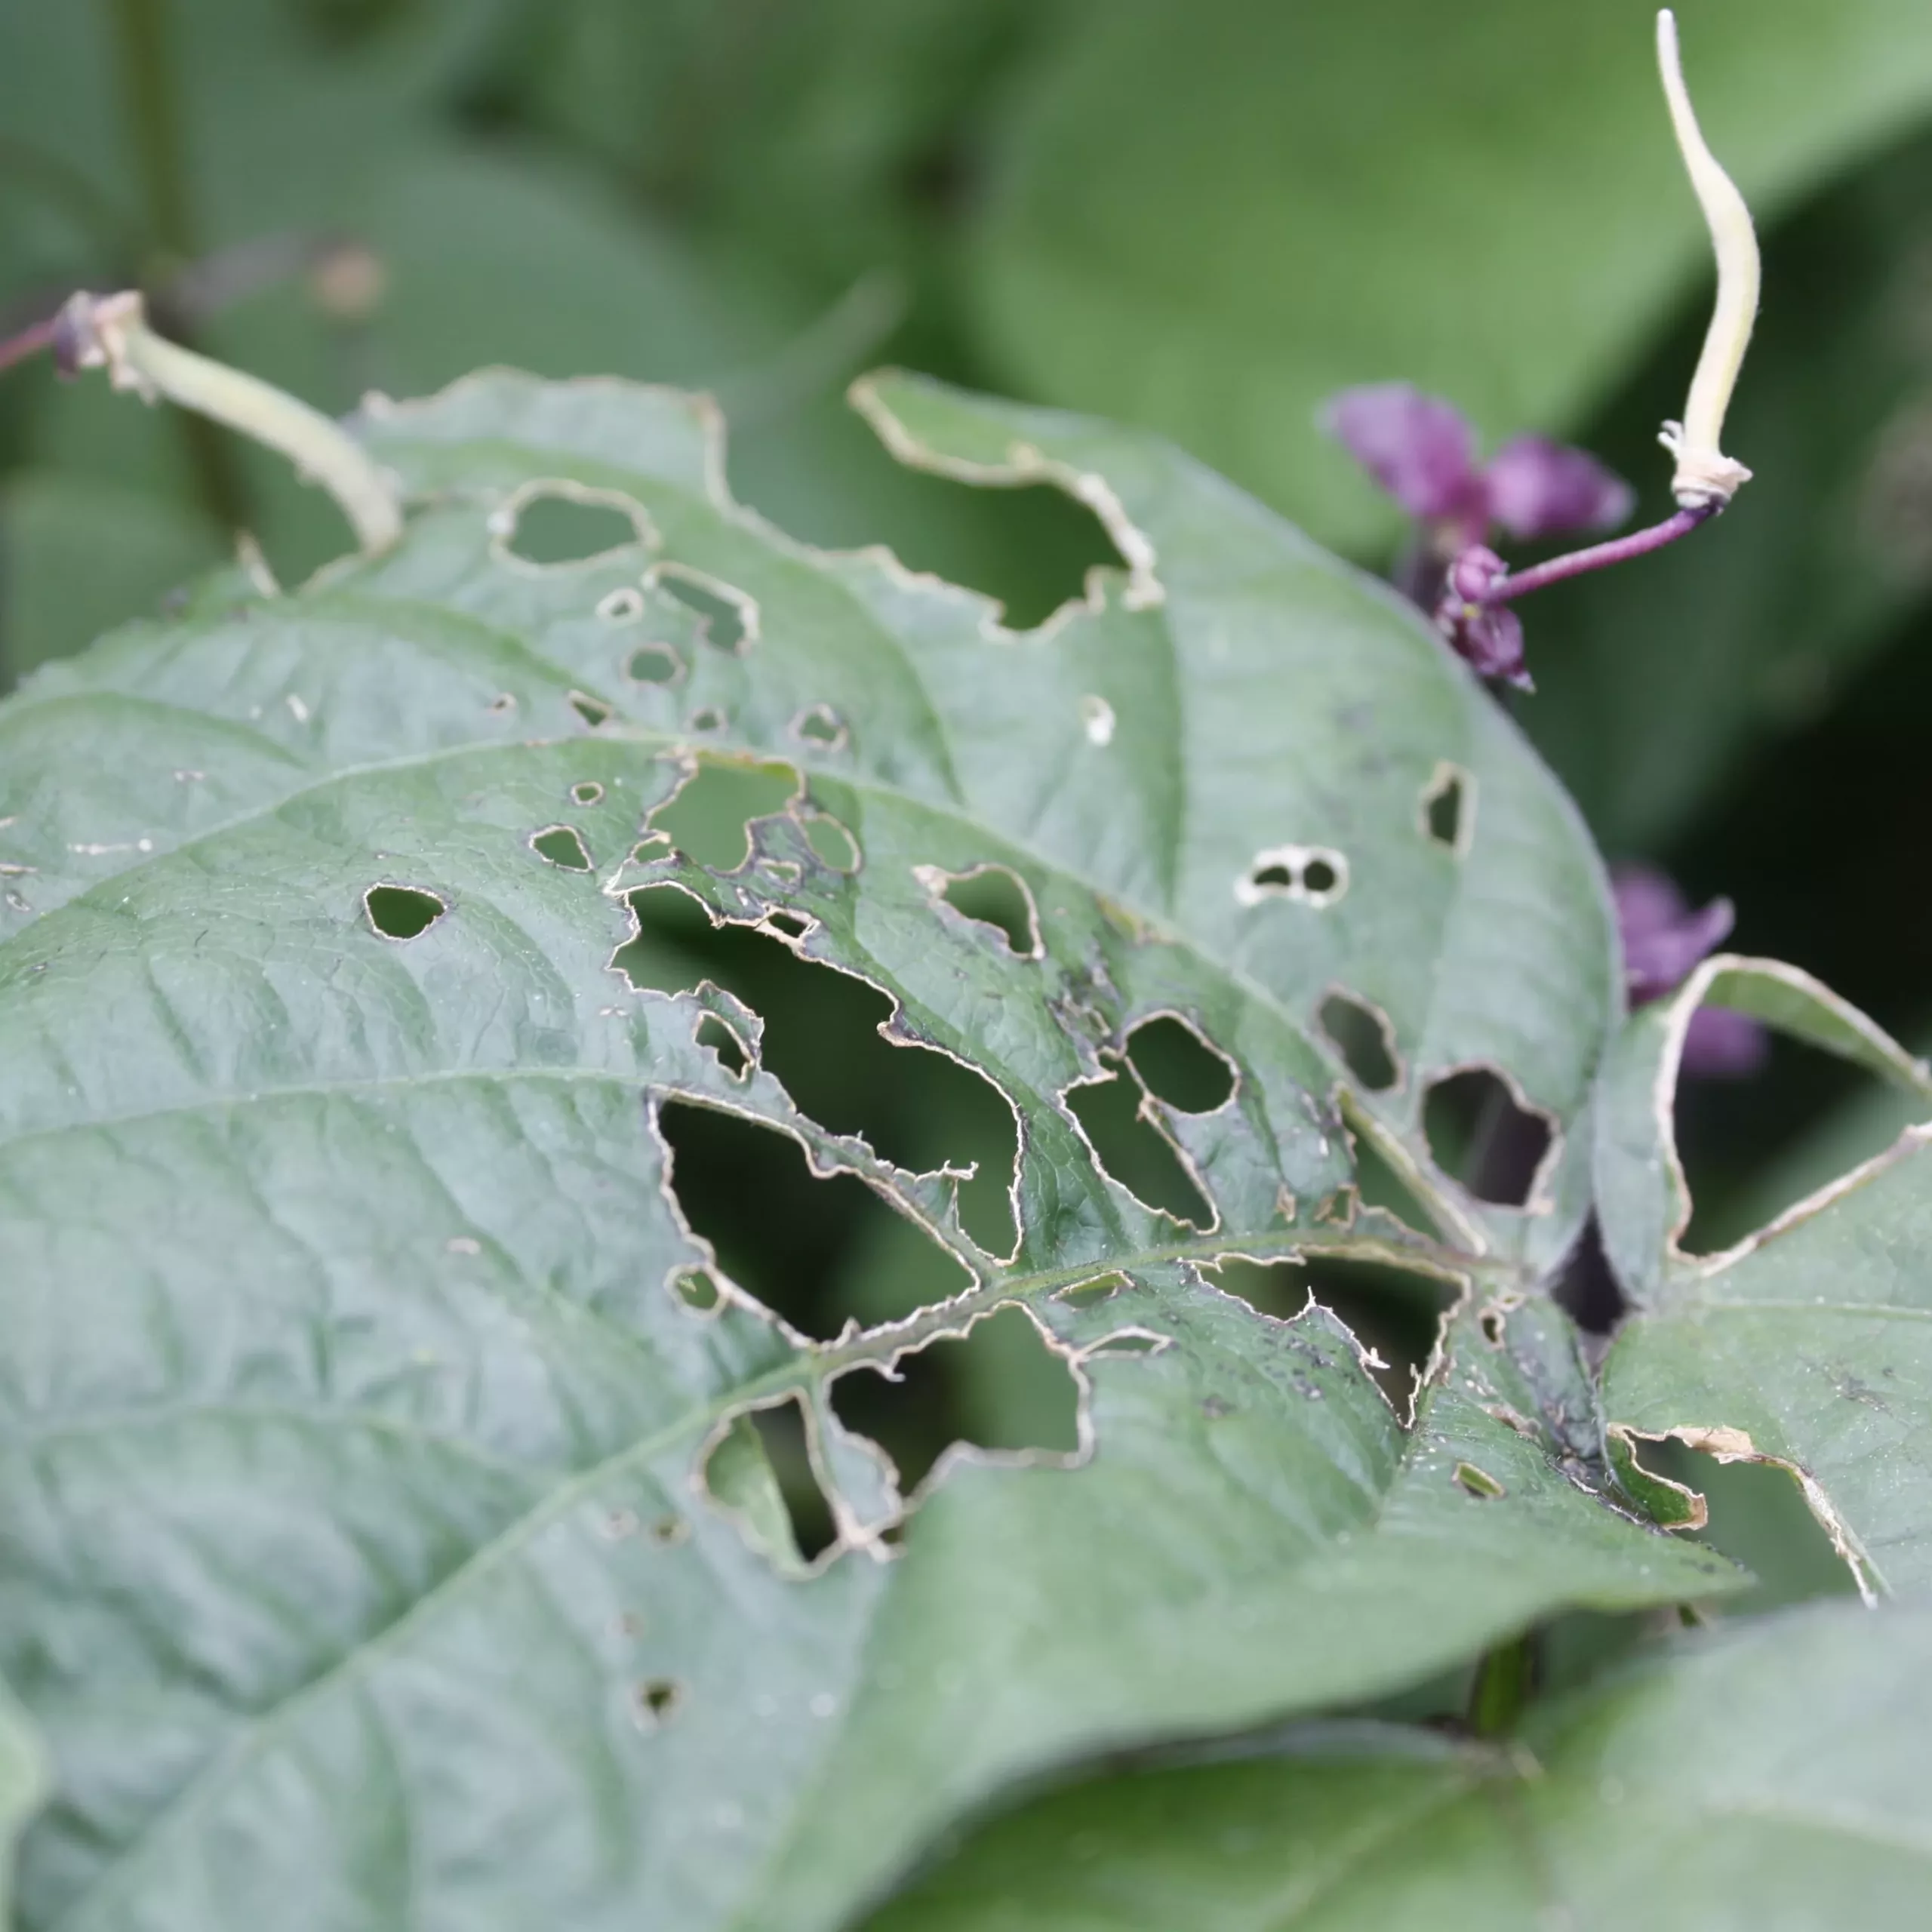 Japanese beetle damage on a bush bean leaf